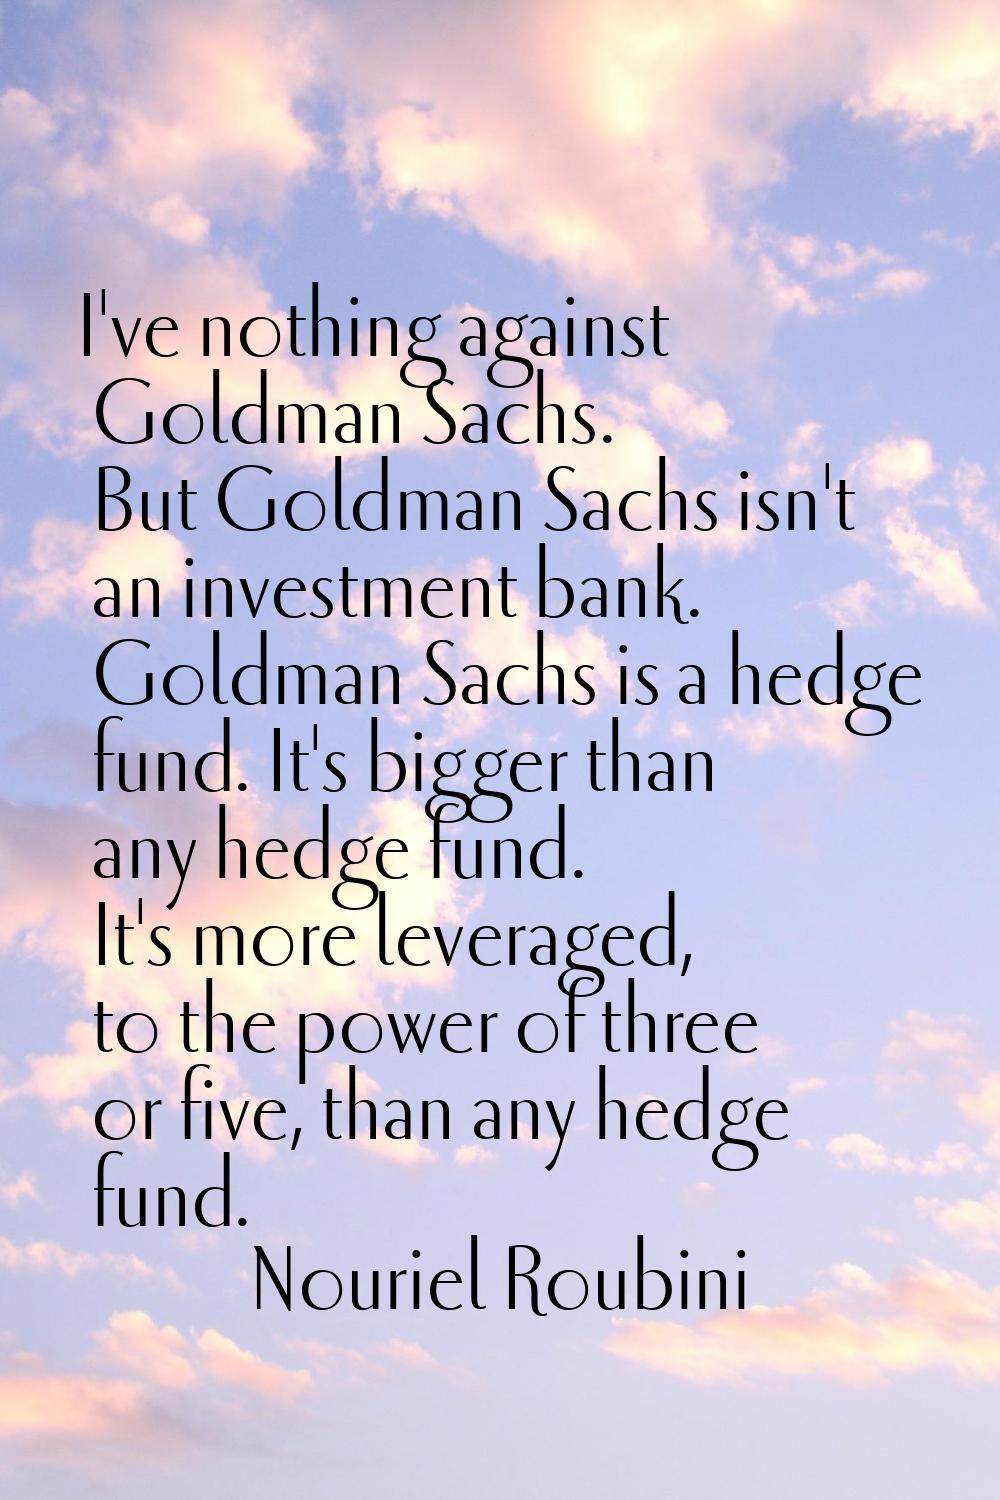 I've nothing against Goldman Sachs. But Goldman Sachs isn't an investment bank. Goldman Sachs is a 